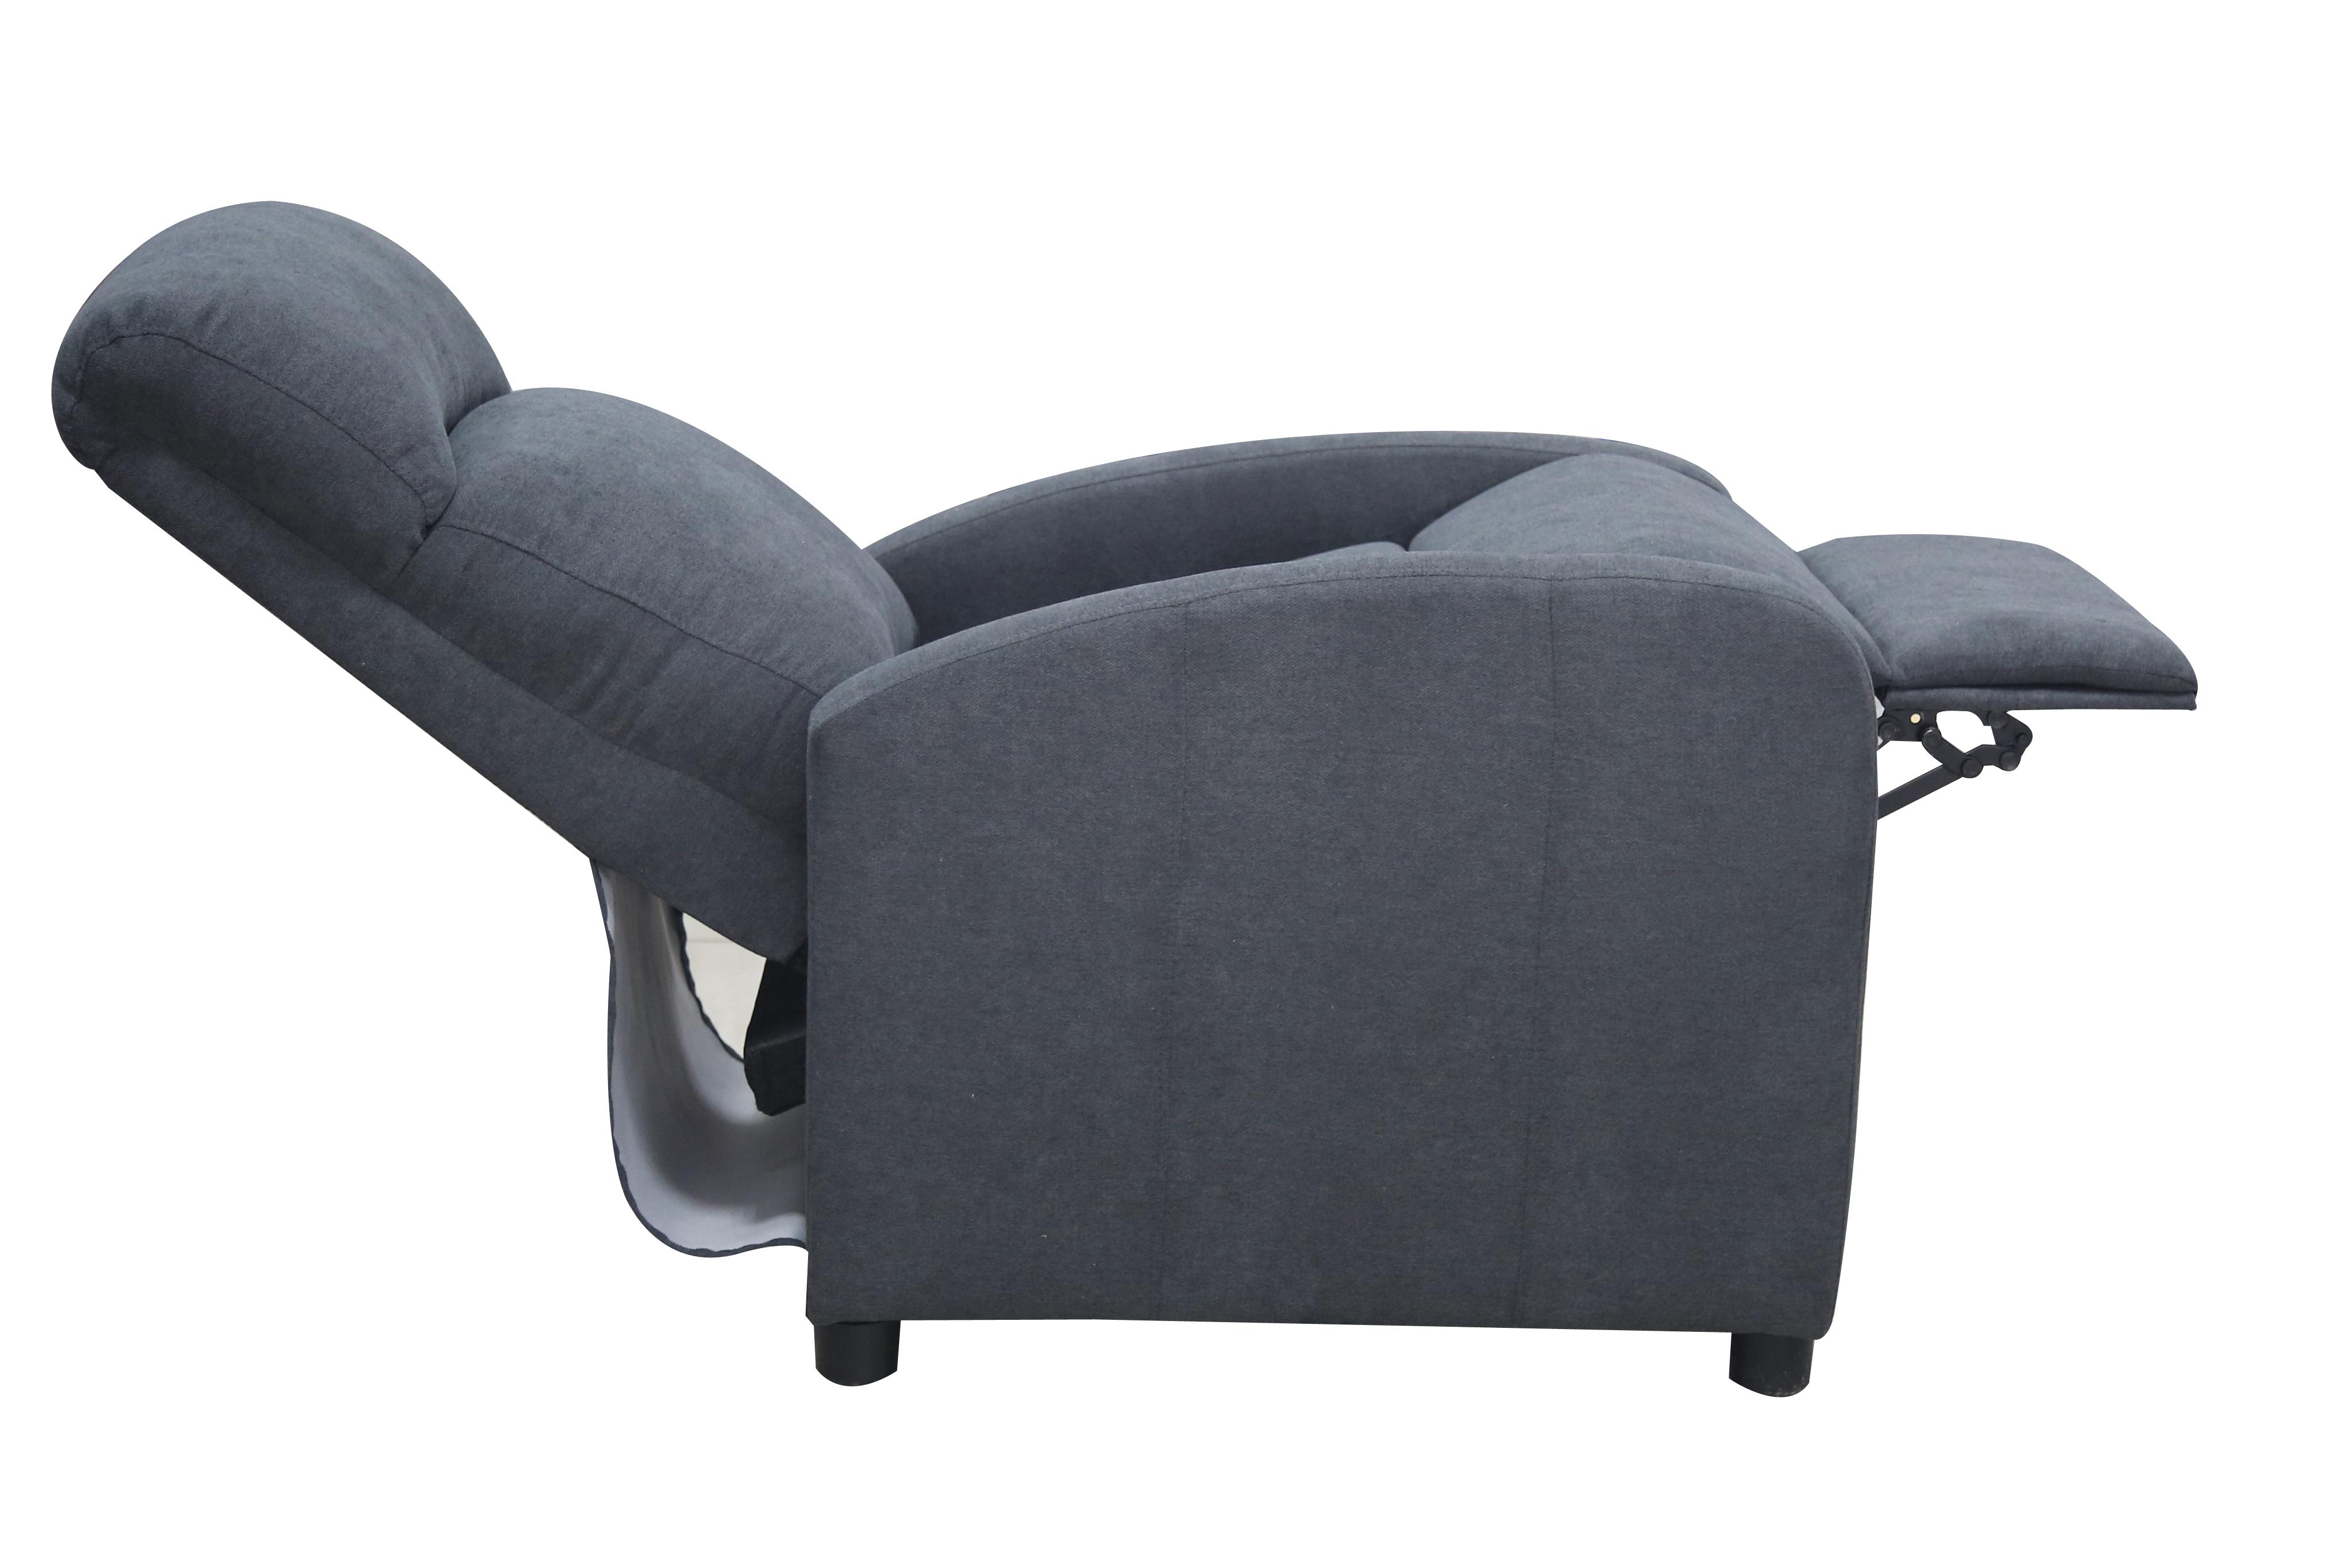 Relaxsessel in Grau mit Relaxfunktion - Grau, MODERN, Textil (65/101/91cm) - Based